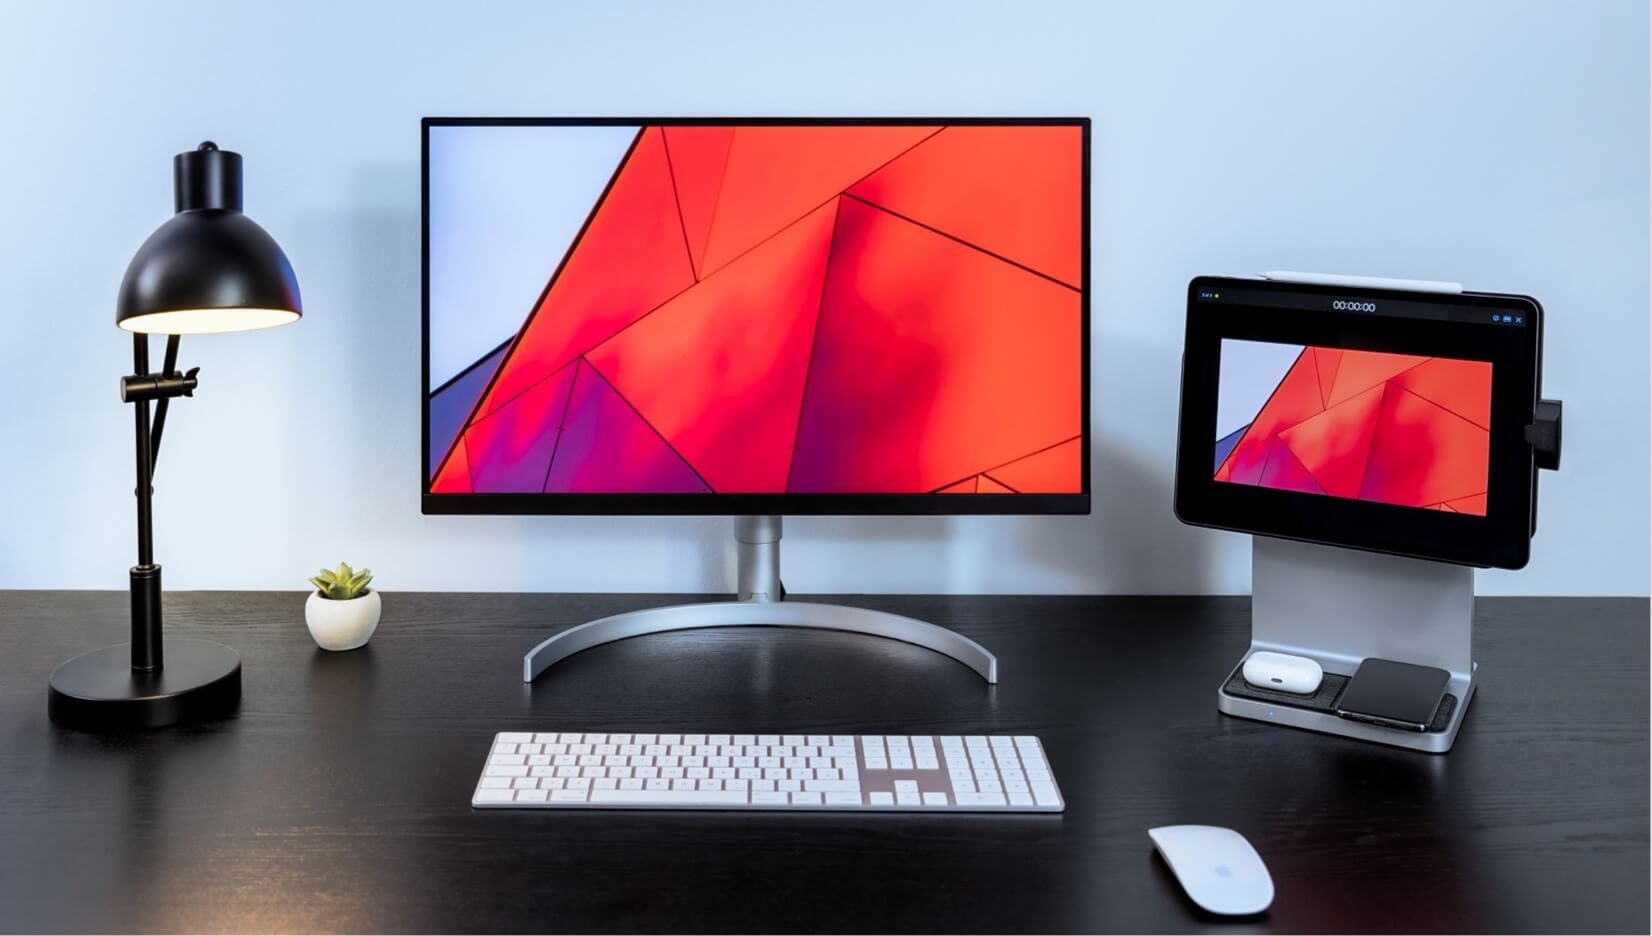 StudioDock on desk next to monitor small